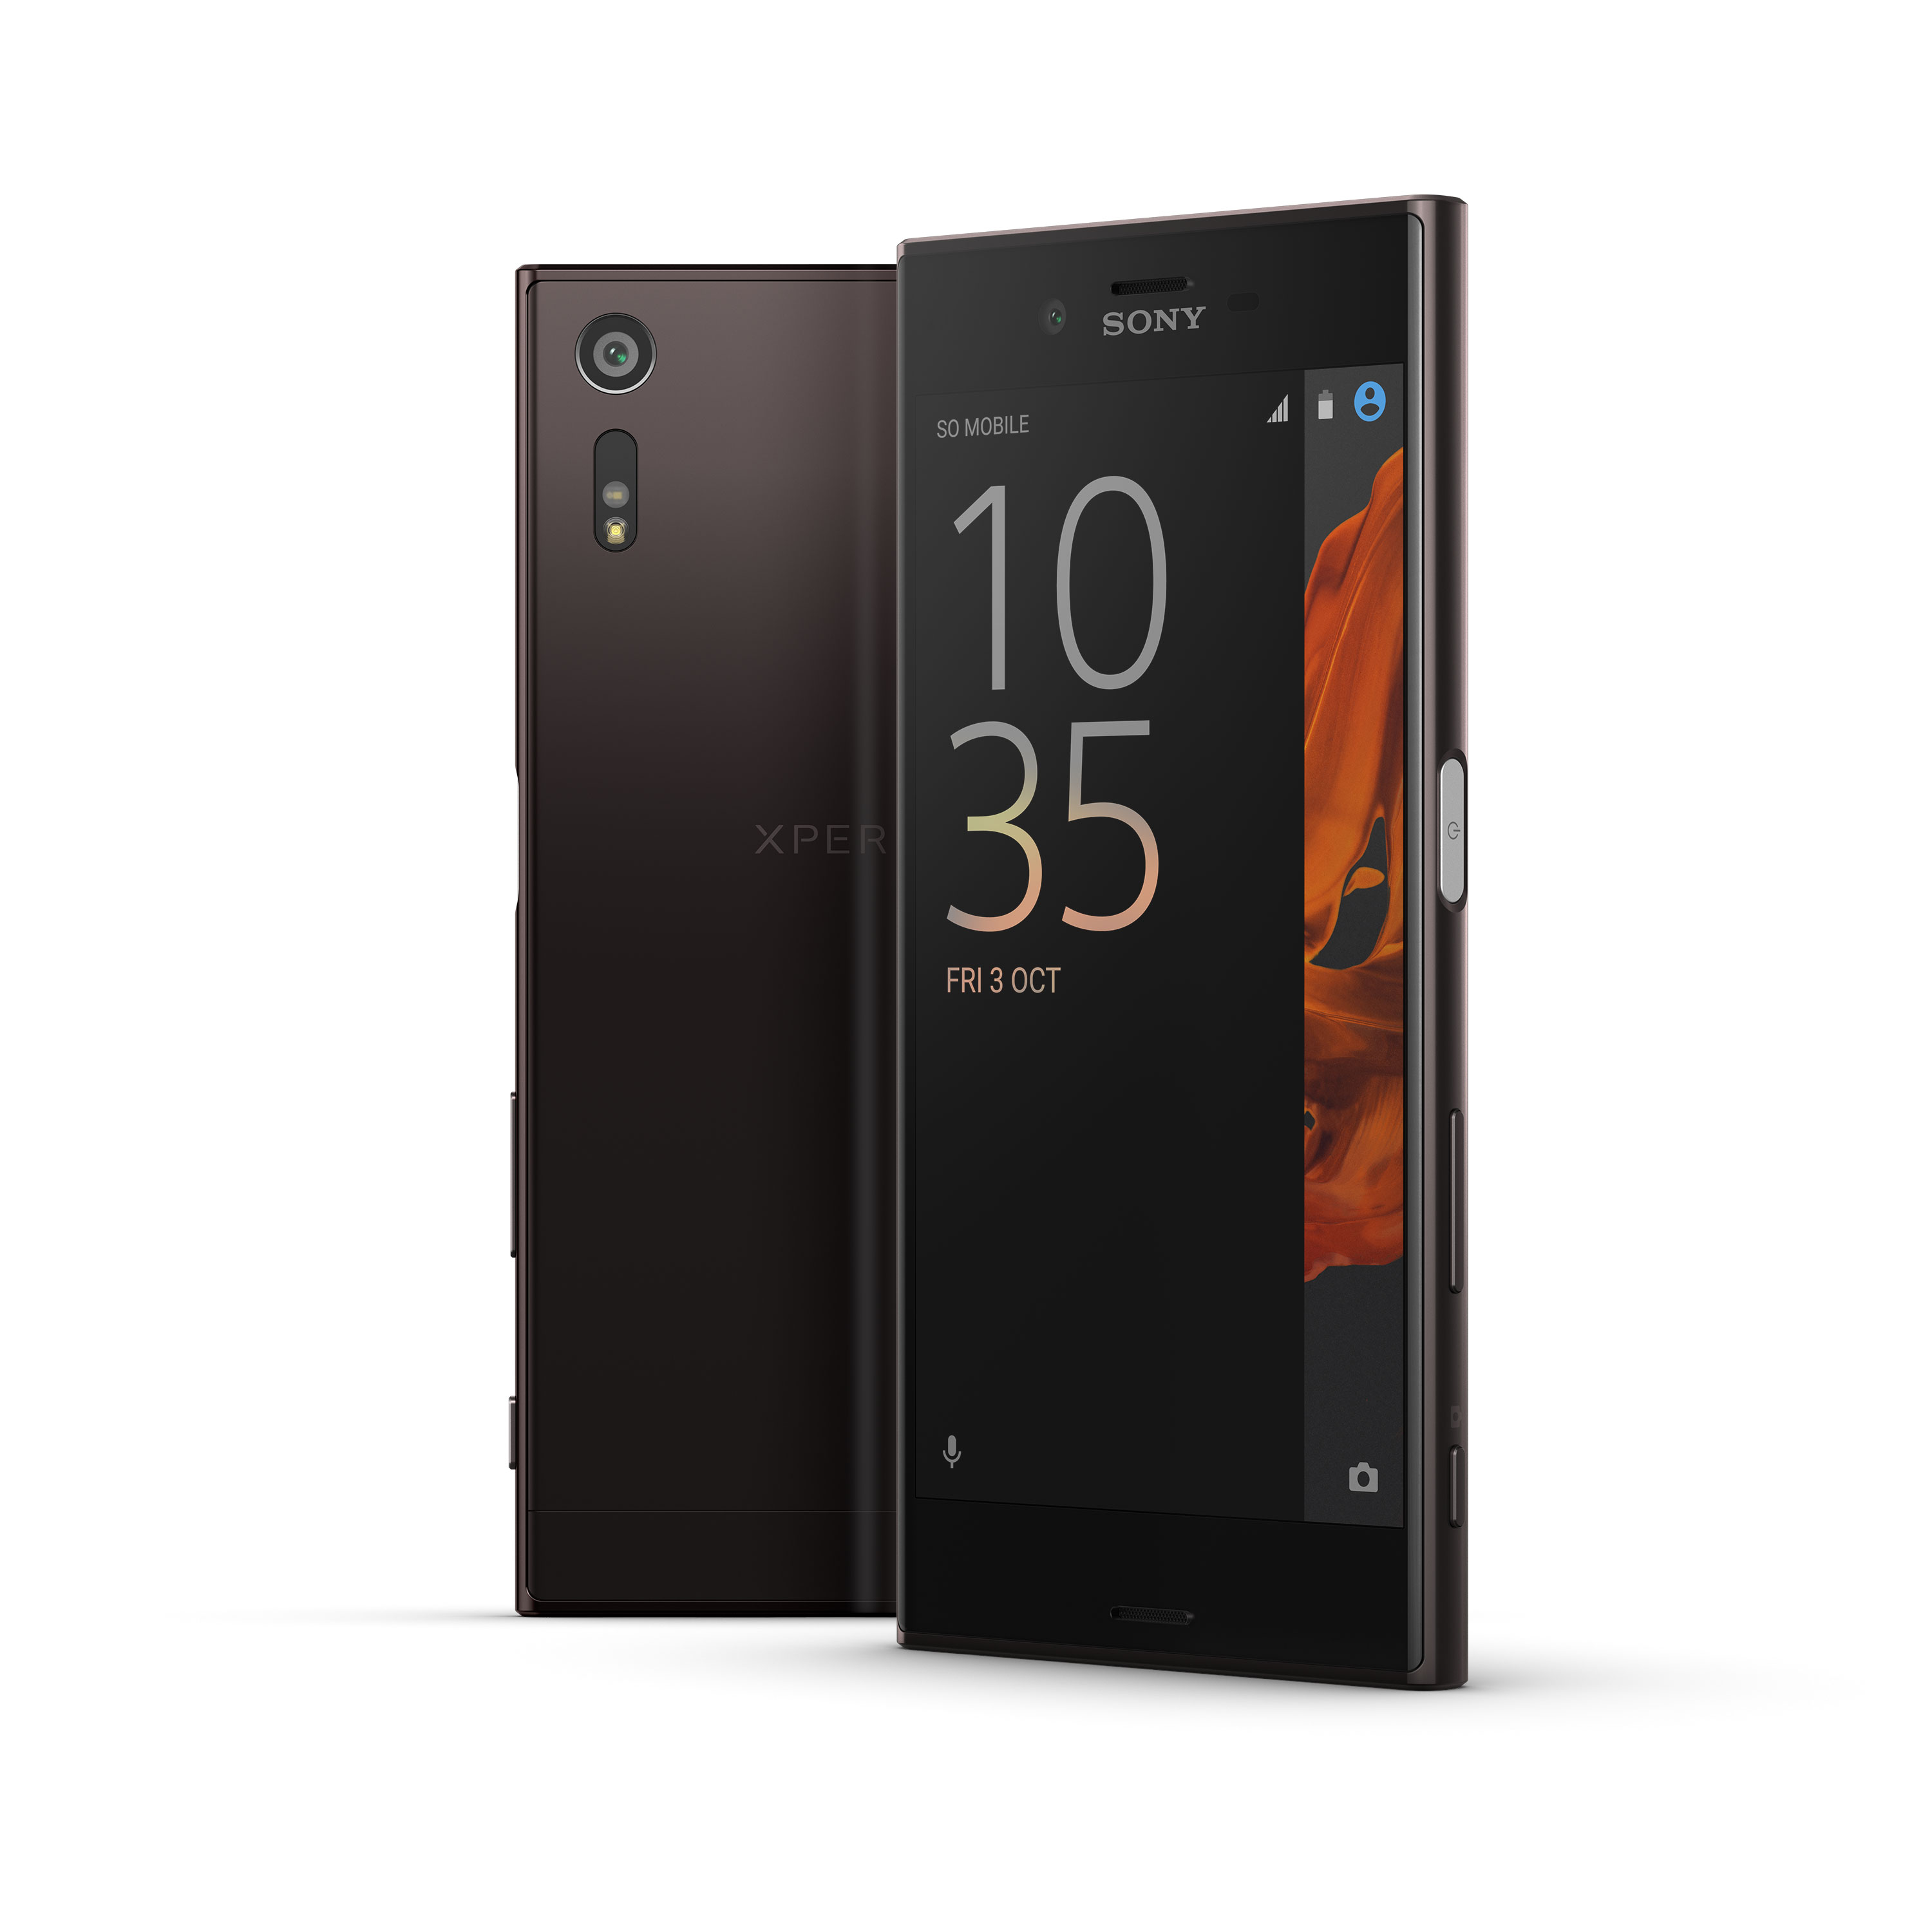 Inefficiënt Algebra Keel Sony unveils Xperia XZ flagship smartphone - NotebookCheck.net News